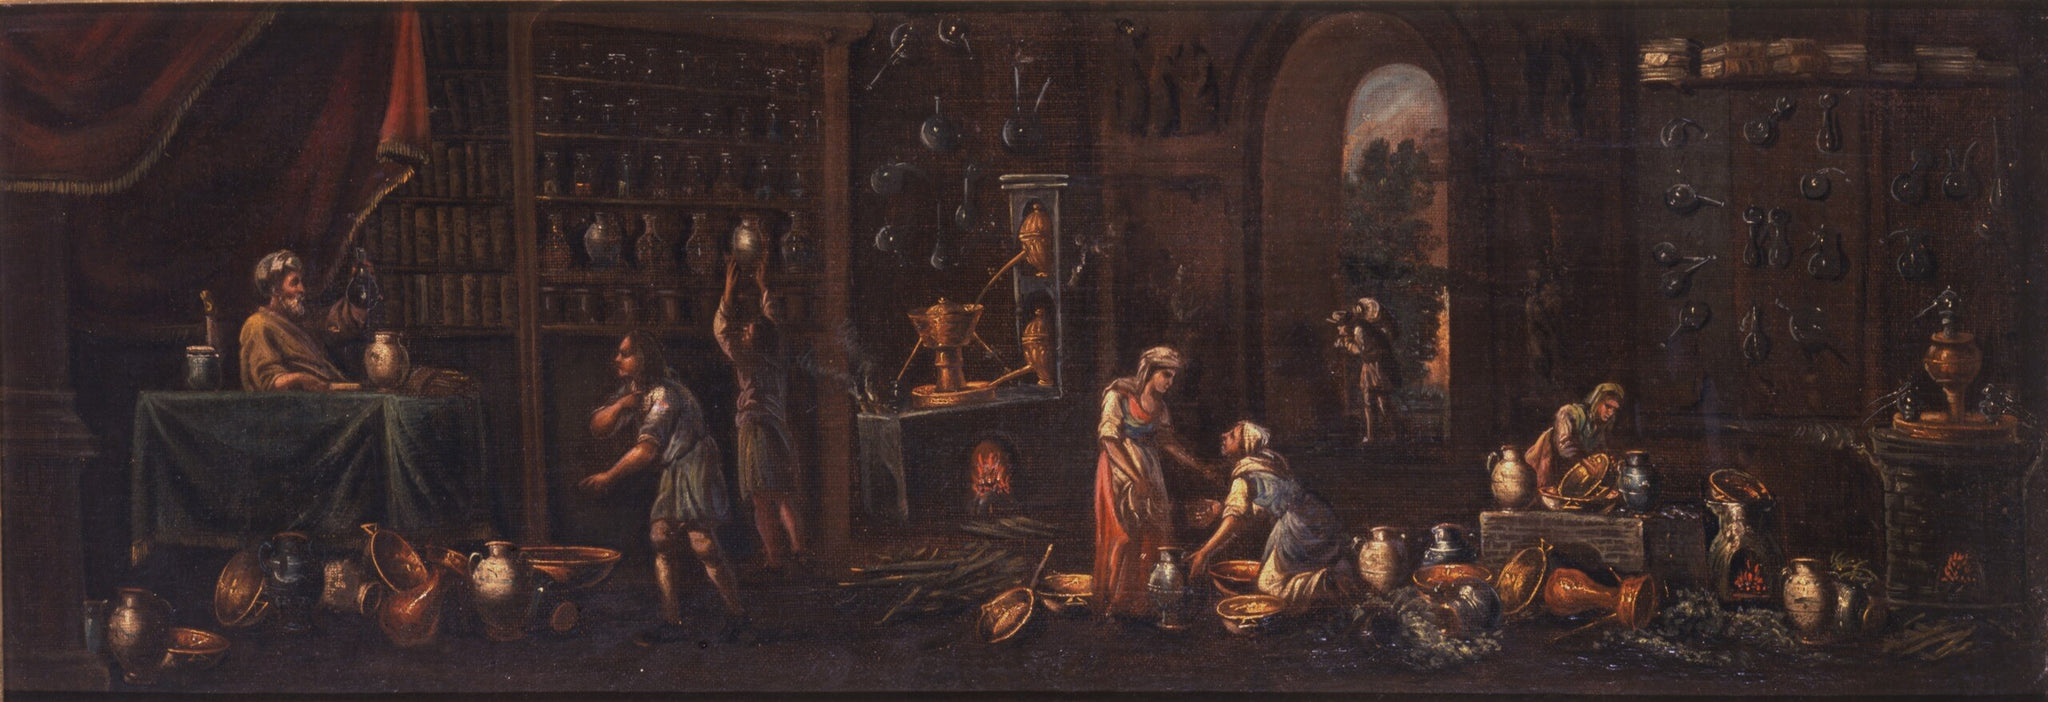 Italian pharmacy in 18th century